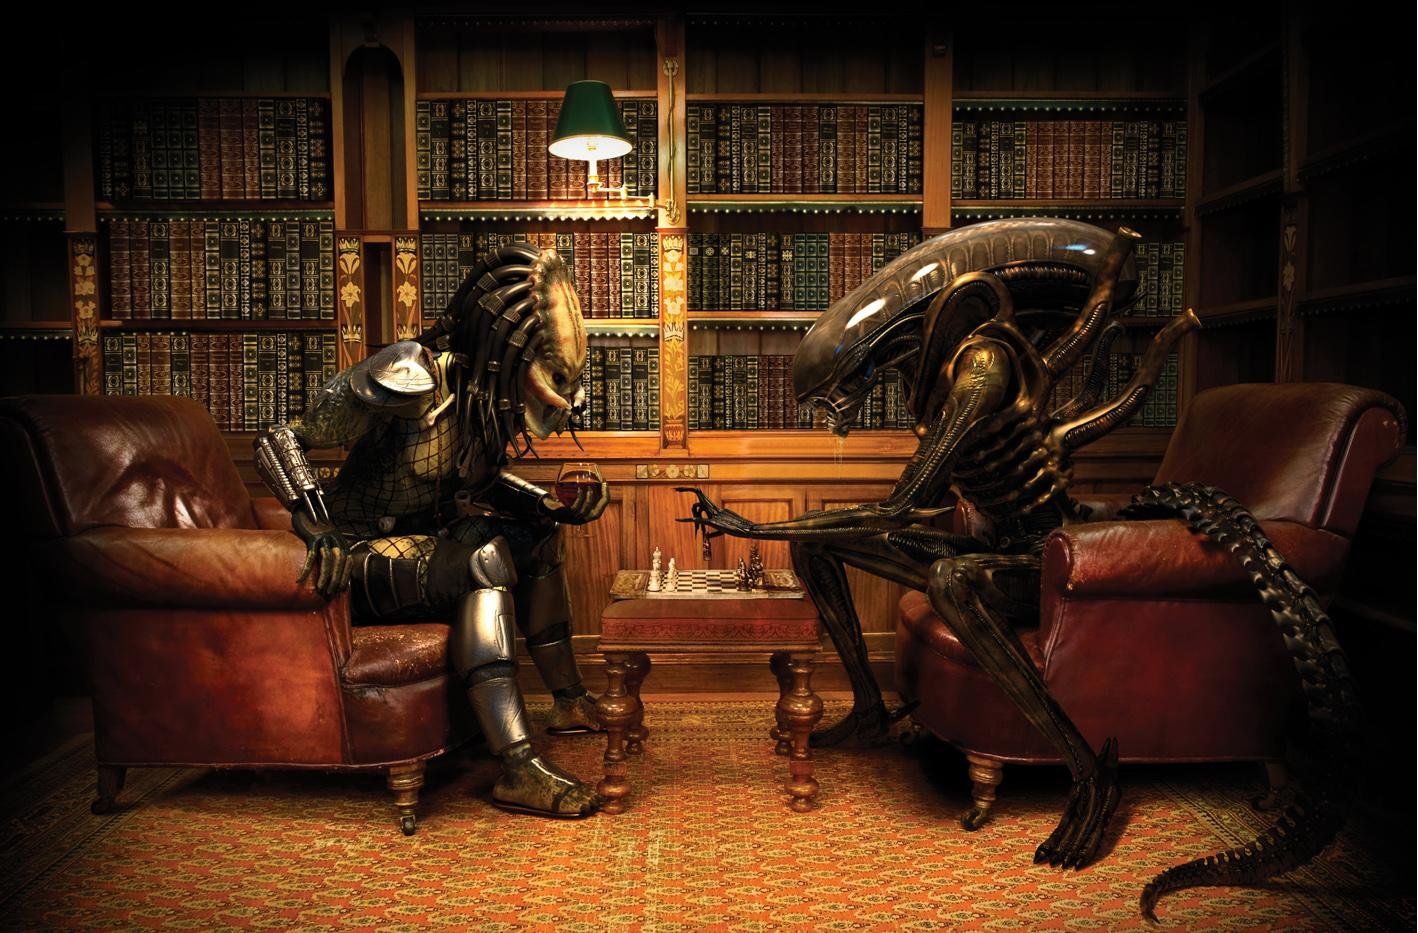 Who will win the compulsory licensing war â€“ 'Alien' bigpharma or generic 'Predators'